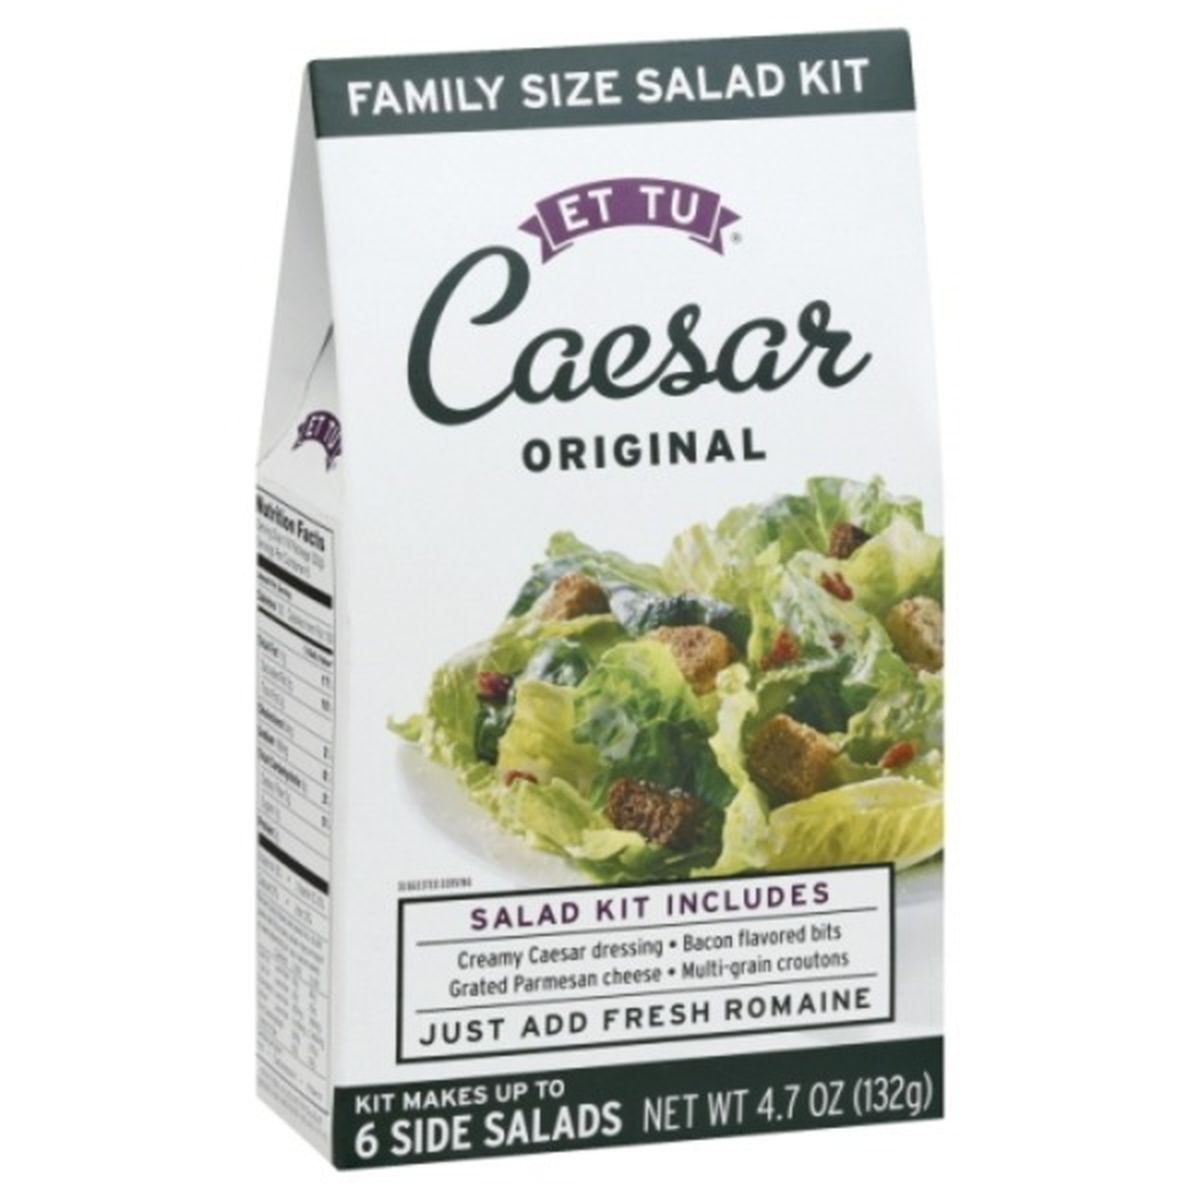 Calories in Et Tu Salad Kit, Caesar Original, Family Size